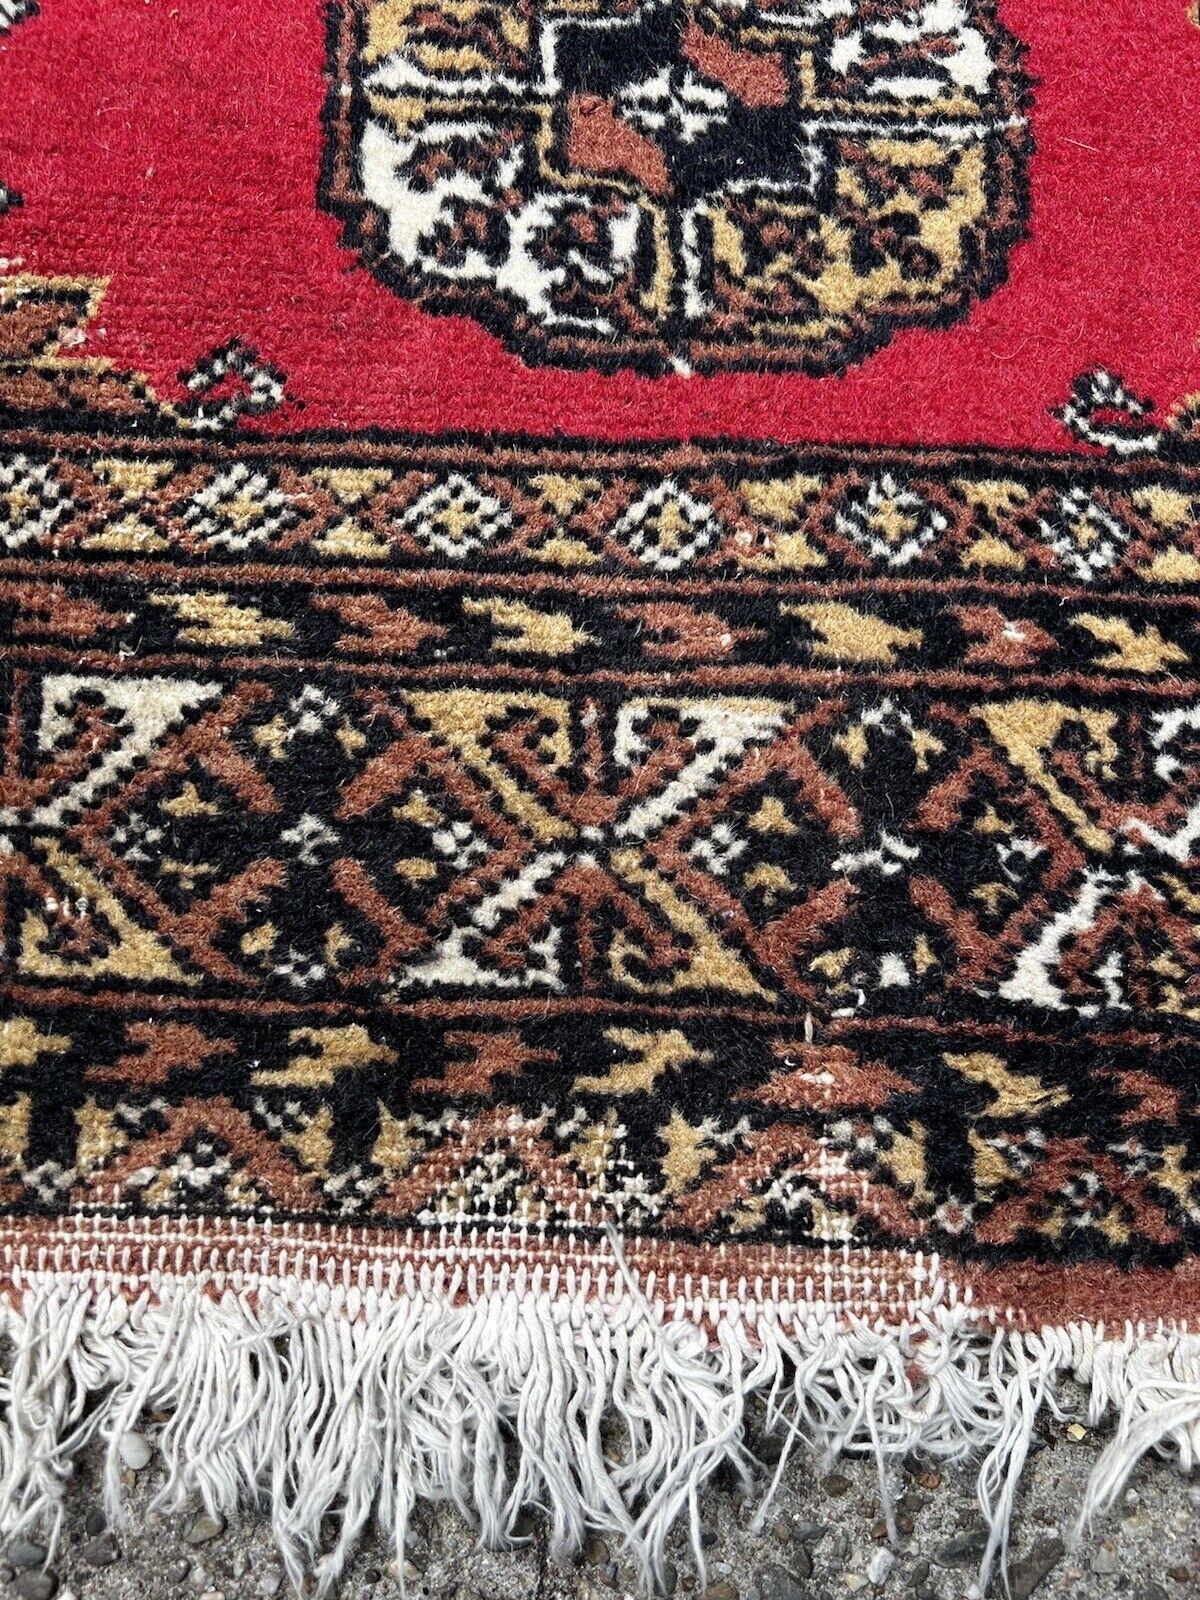 Wool Handmade Vintage Uzbek Bukhara Rug 2.1' x 3', 1960s - 1S25 For Sale